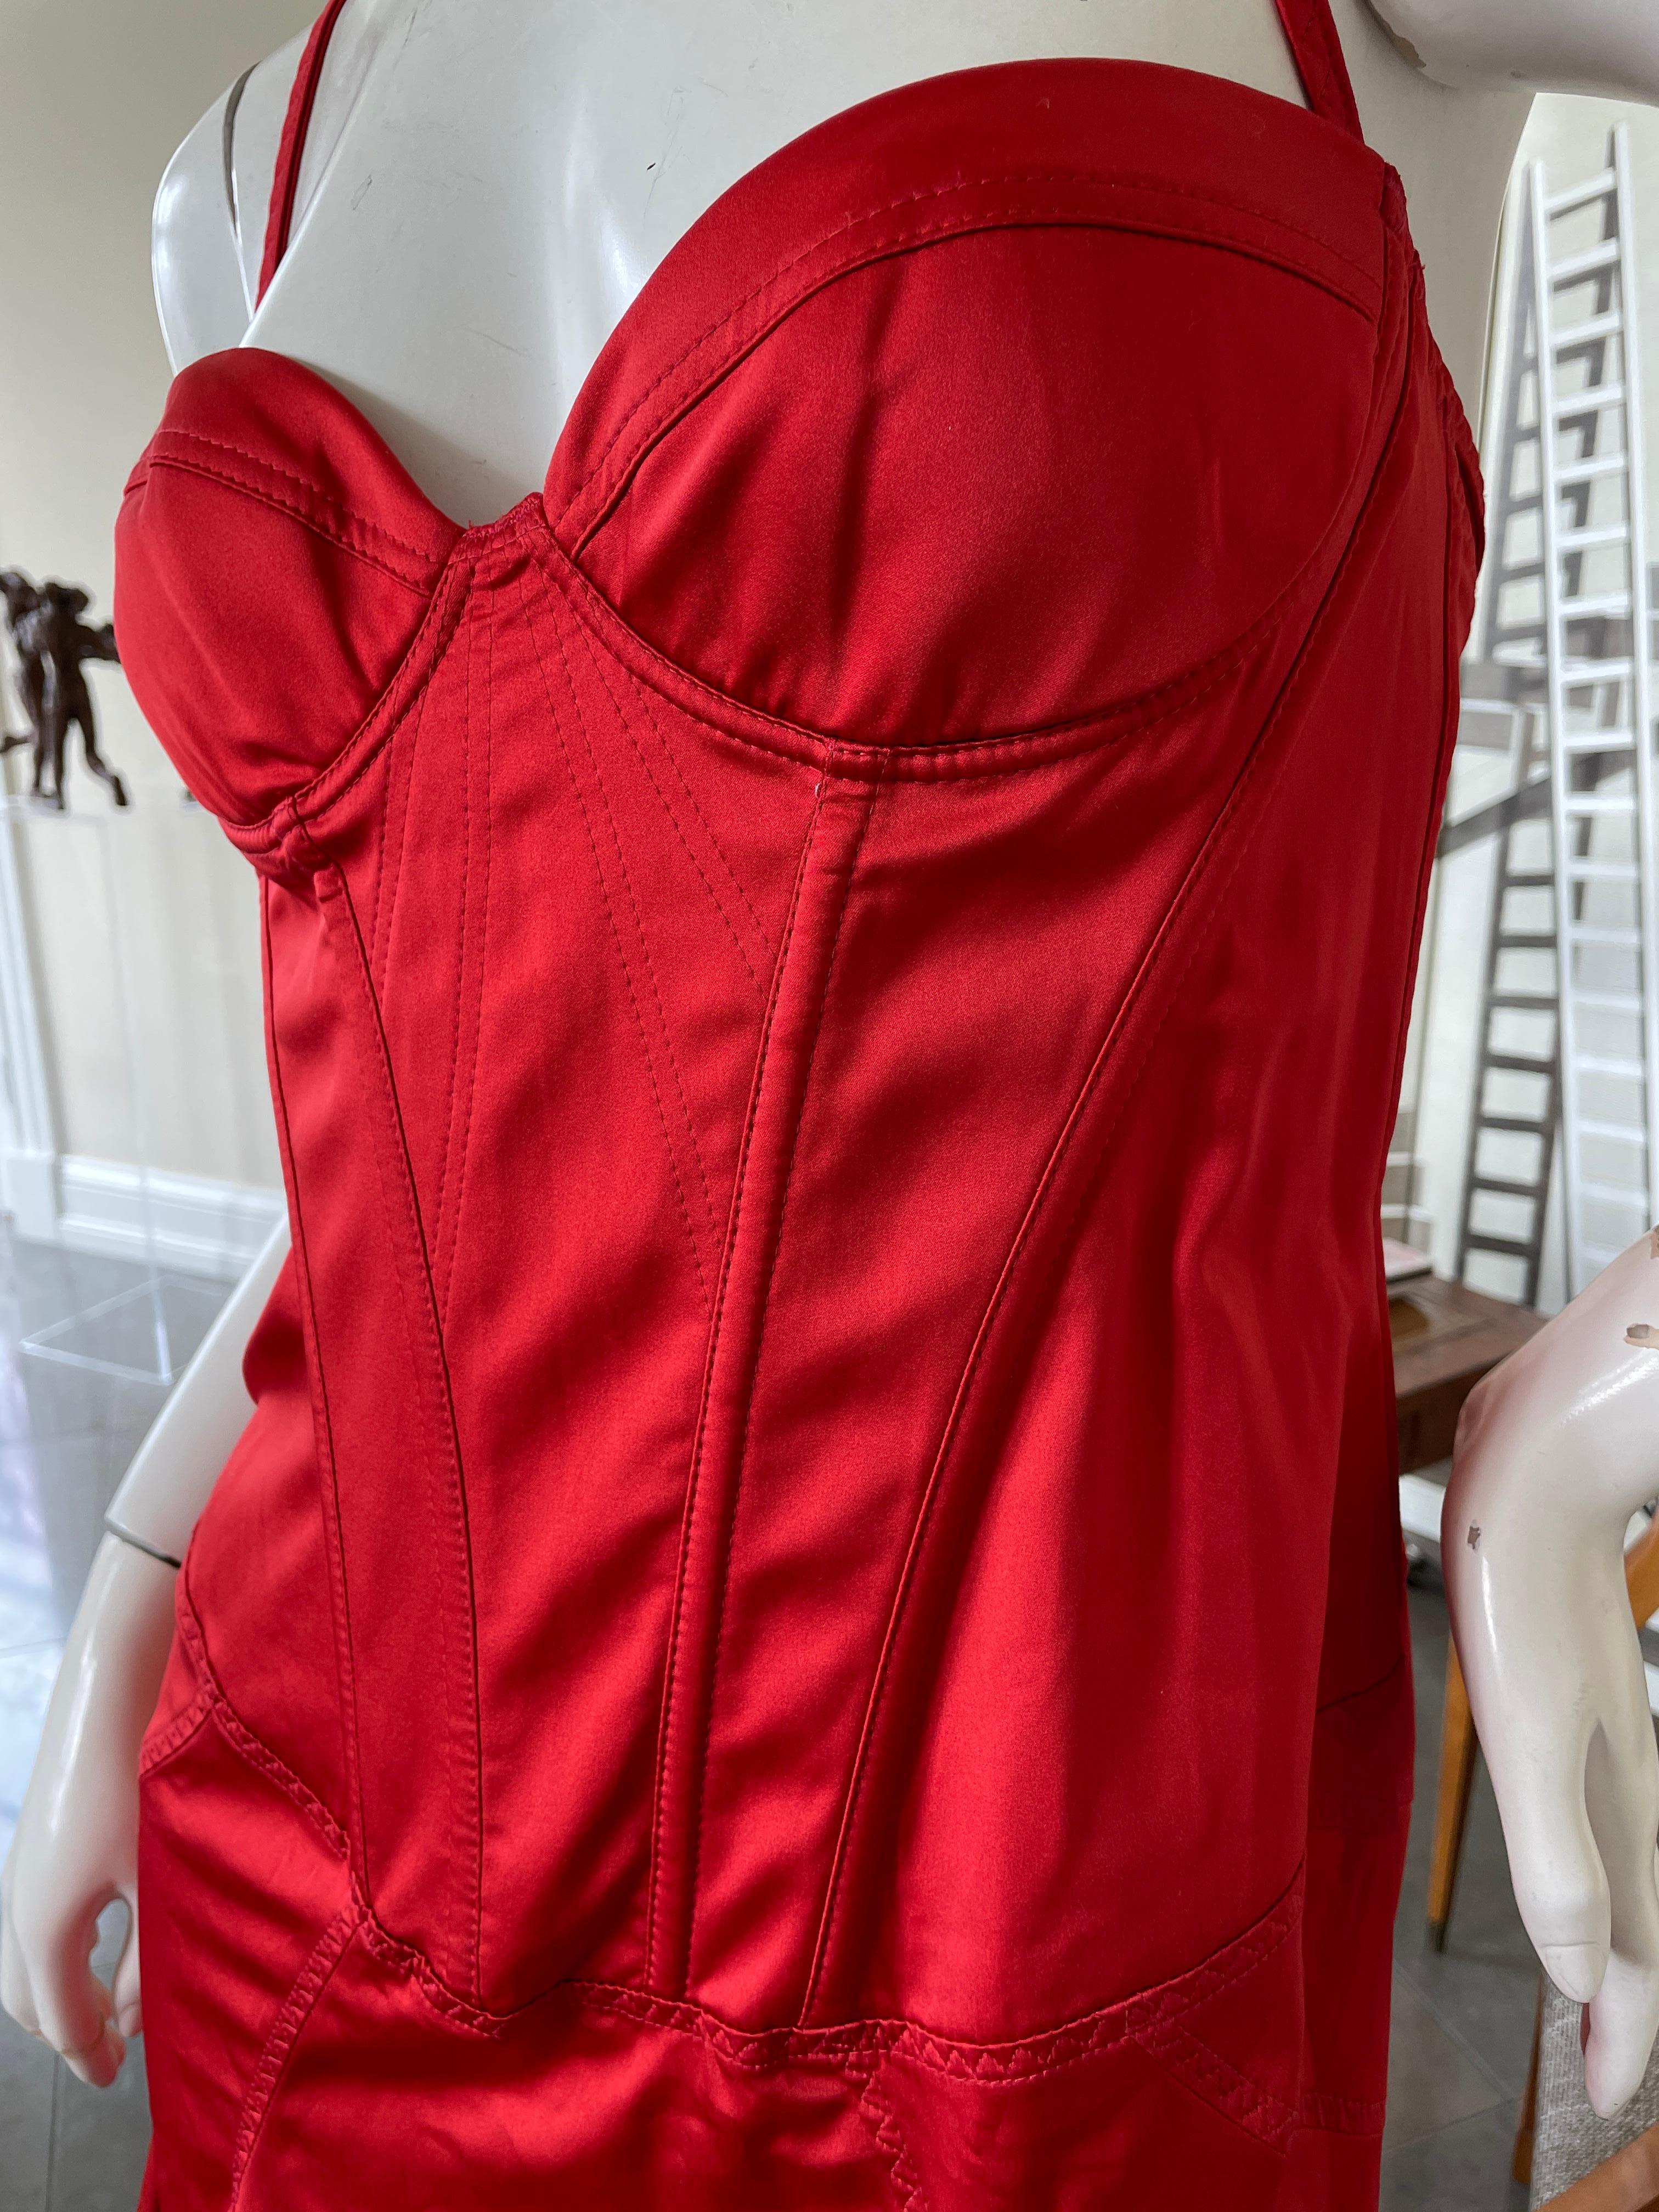 roberto cavalli red leather corset dress